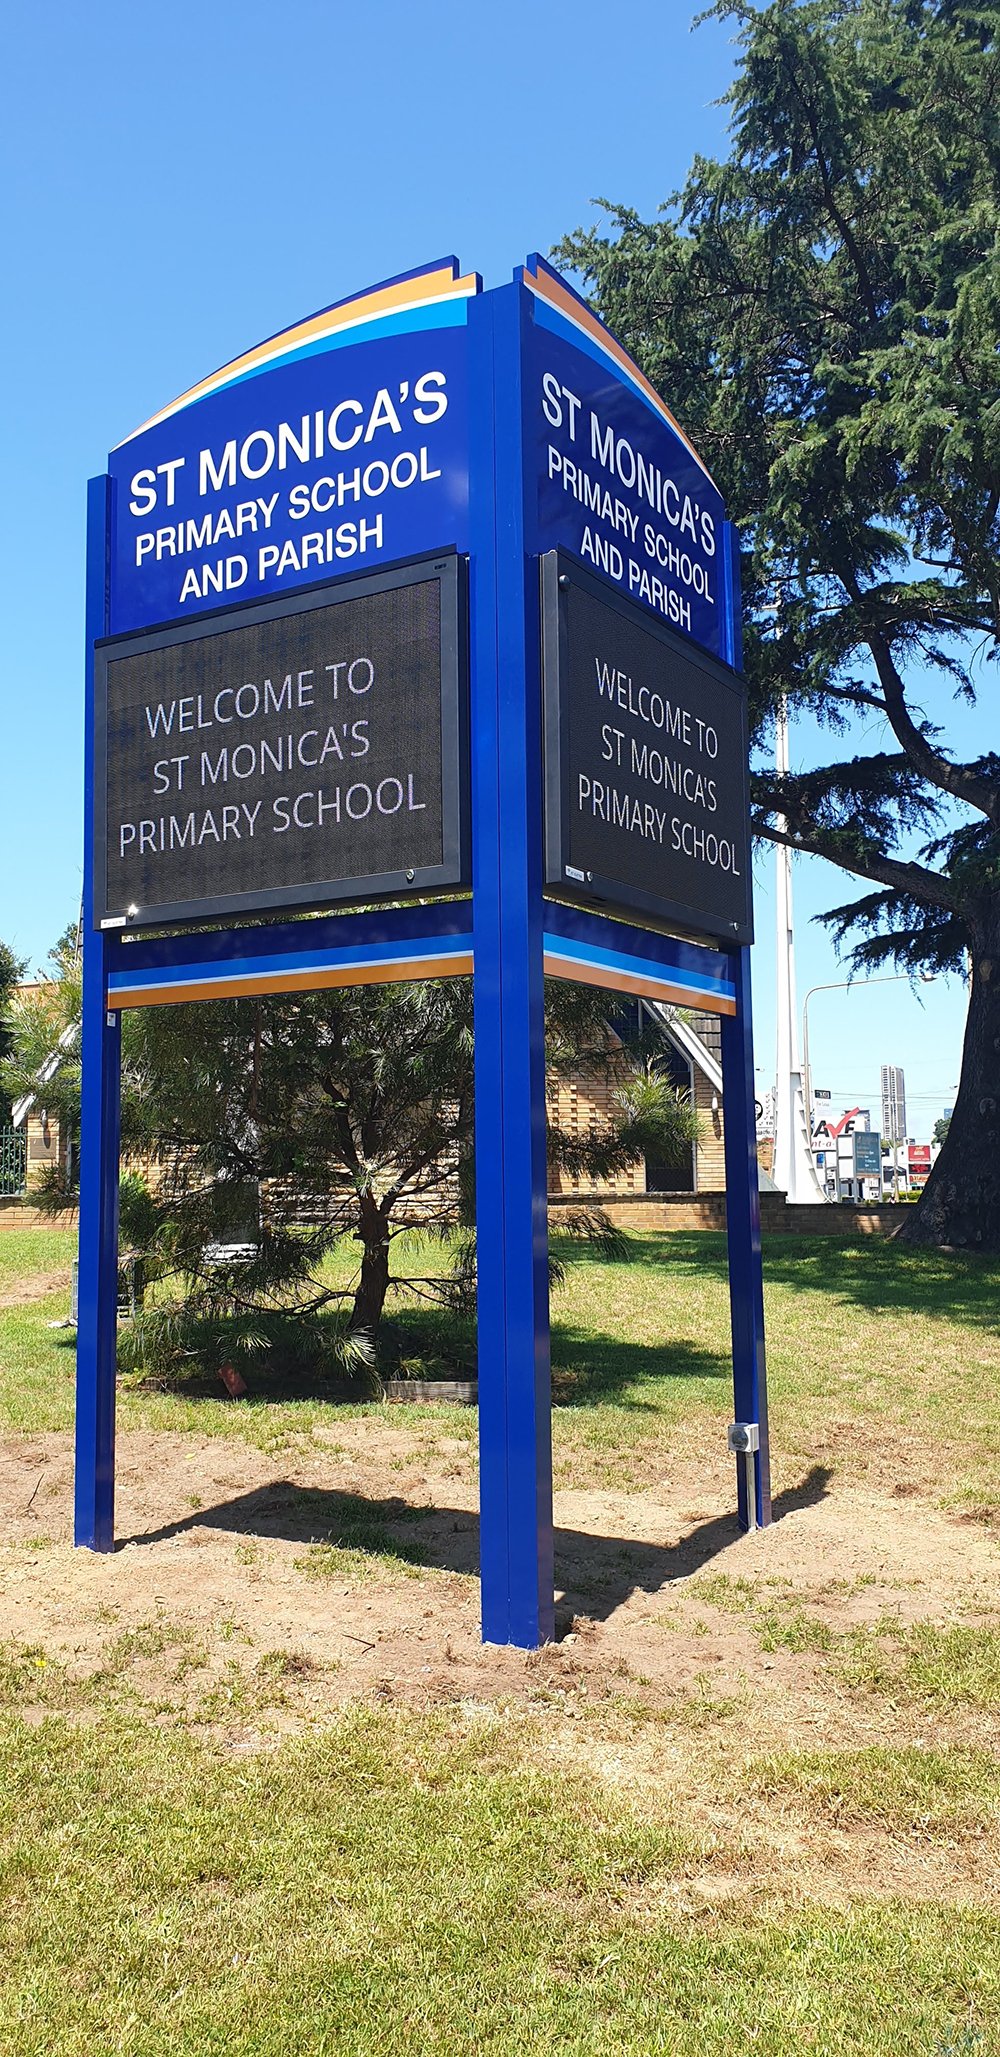 St Monica’s Primary School and Parish